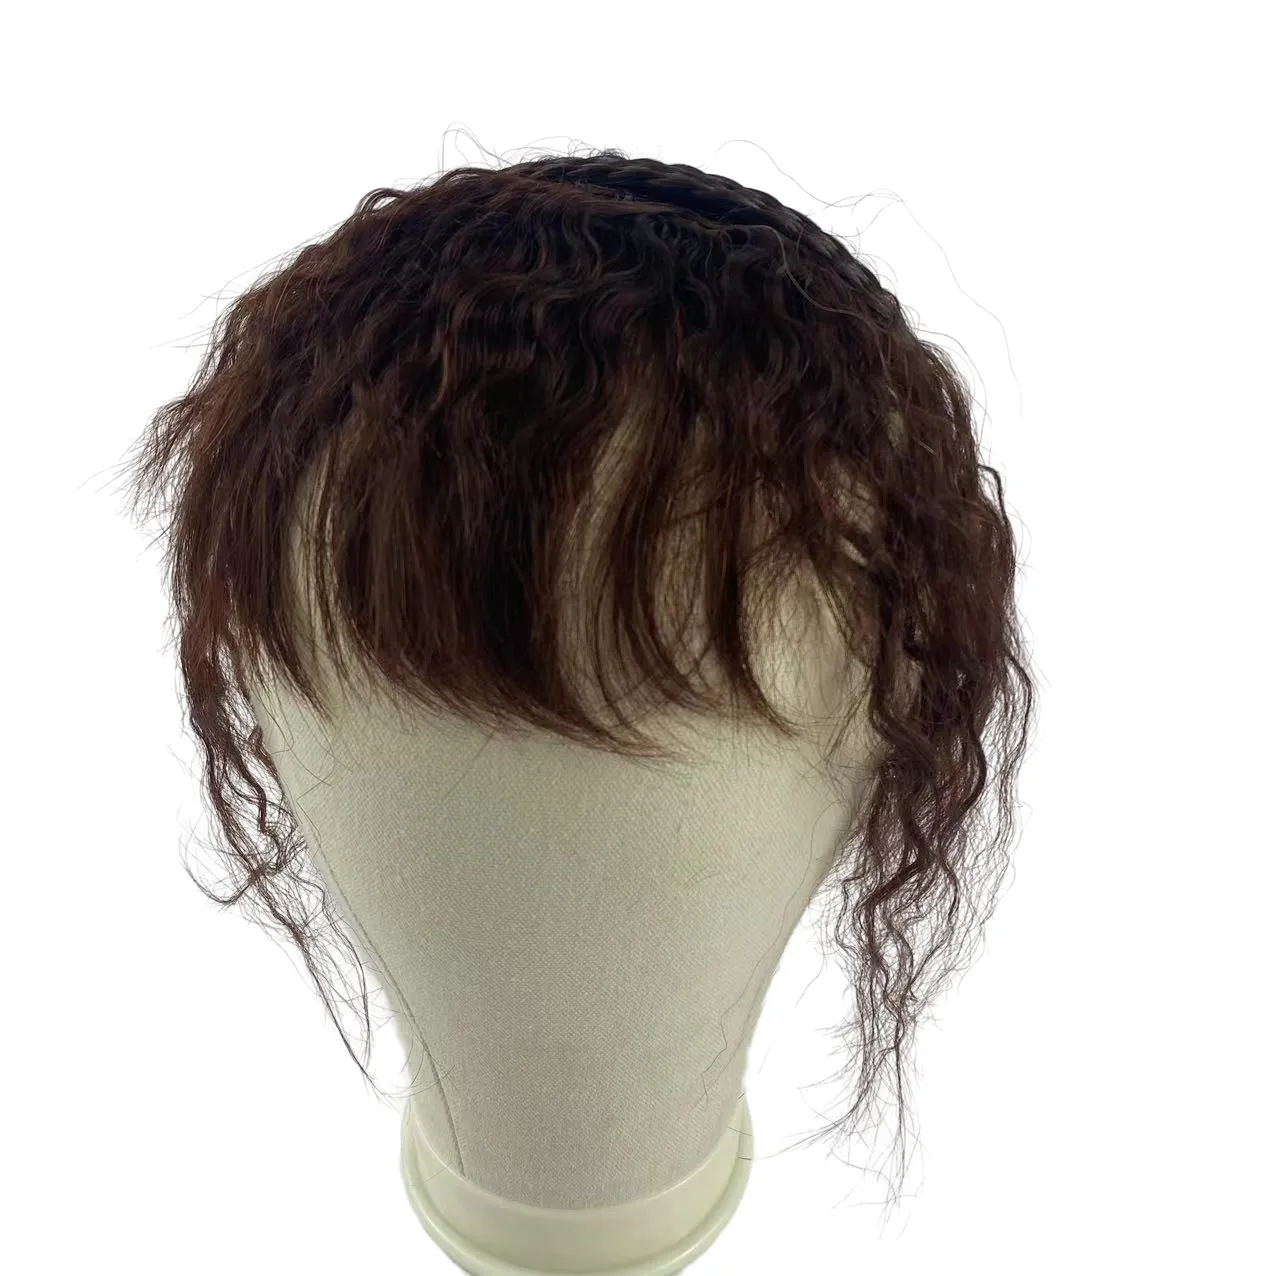 Bangs Hair Braided Headband Natural Looking Hair Hoop With Neat Fringe Bangs For Women Girls Hair Accessories